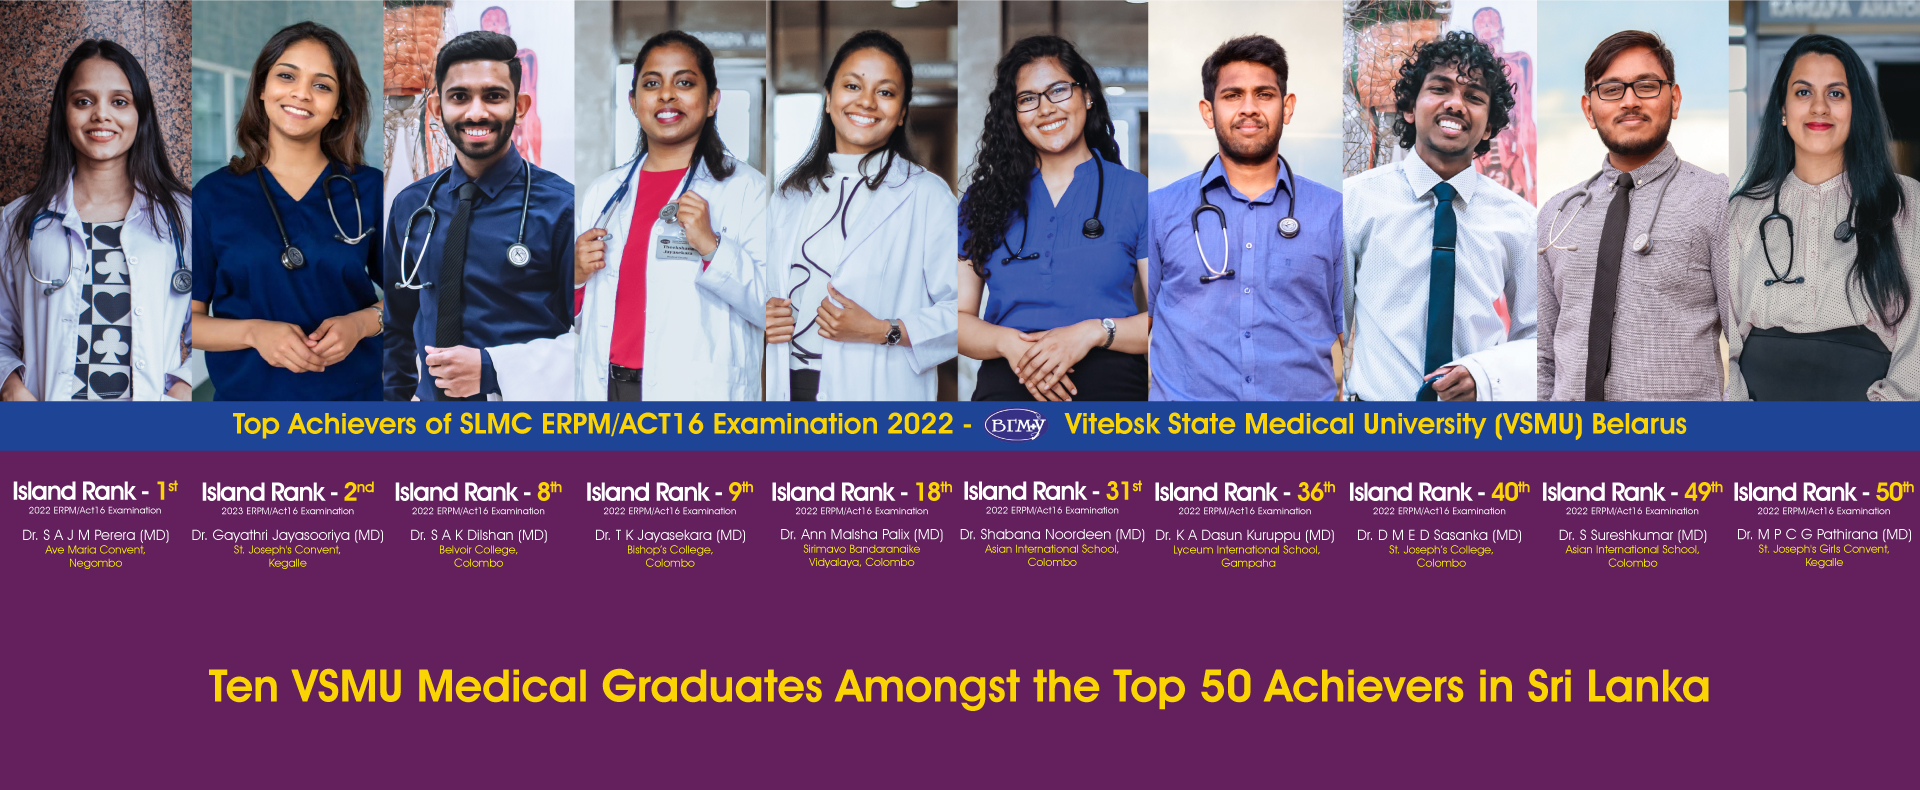 Ten VSMU Medical Graduates Amongst the Top 50 Achievers in Sri Lanka